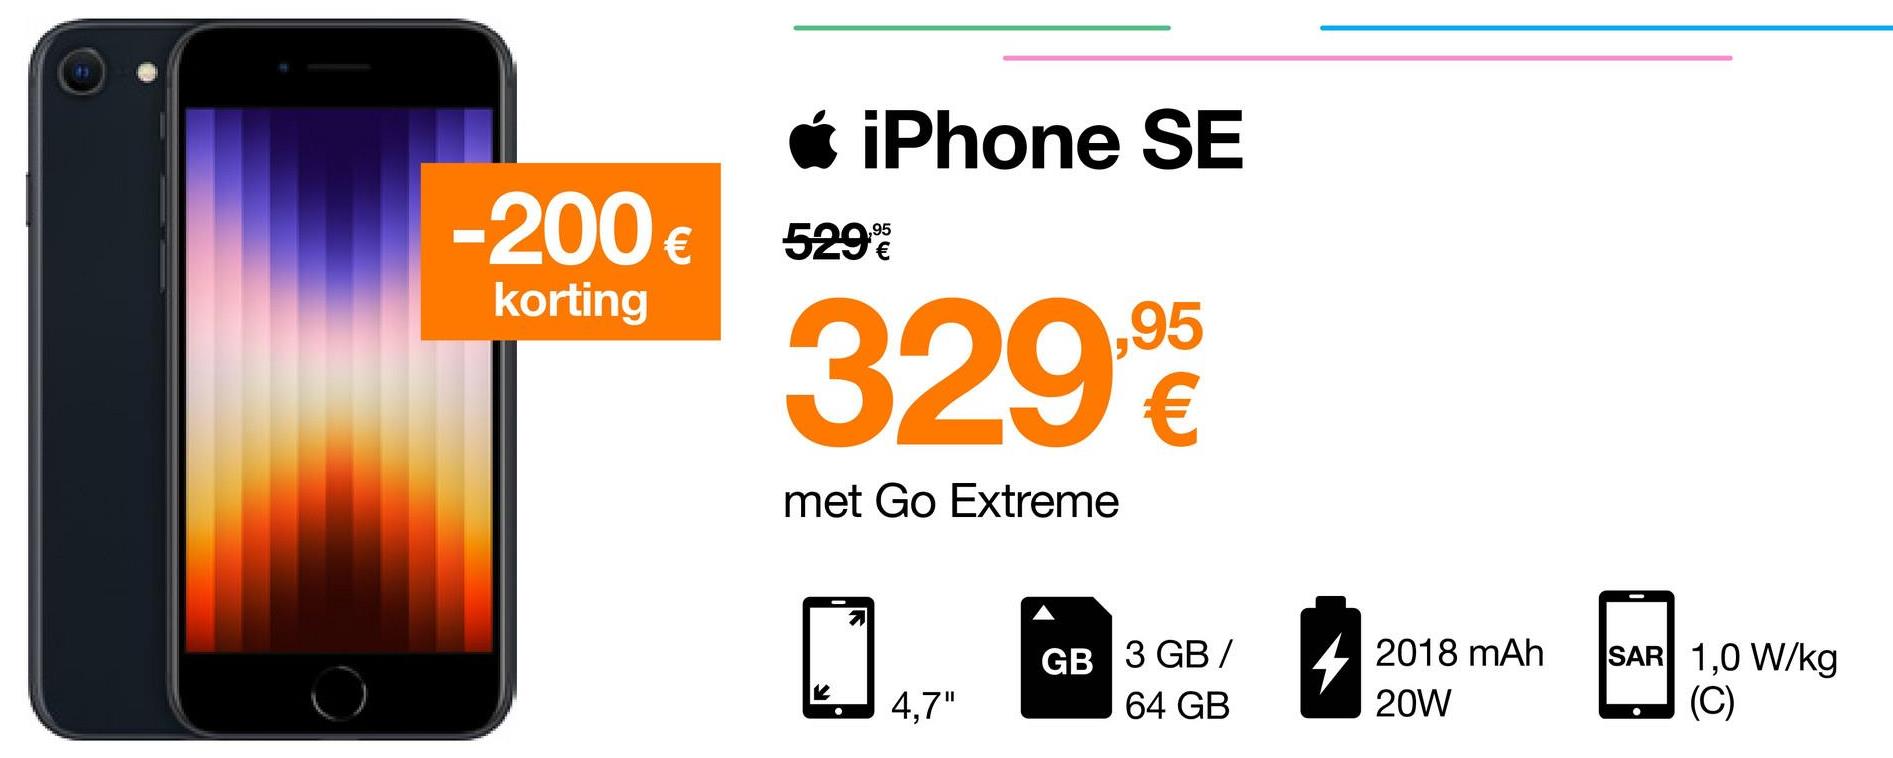 iPhone SE
329.990
€
met Go Extreme
GB 3 GB/
64 GB
4,7"
-200€ 529*%
€
korting
4
2018 mAh
20W
SAR 1,0 W/kg
(C)